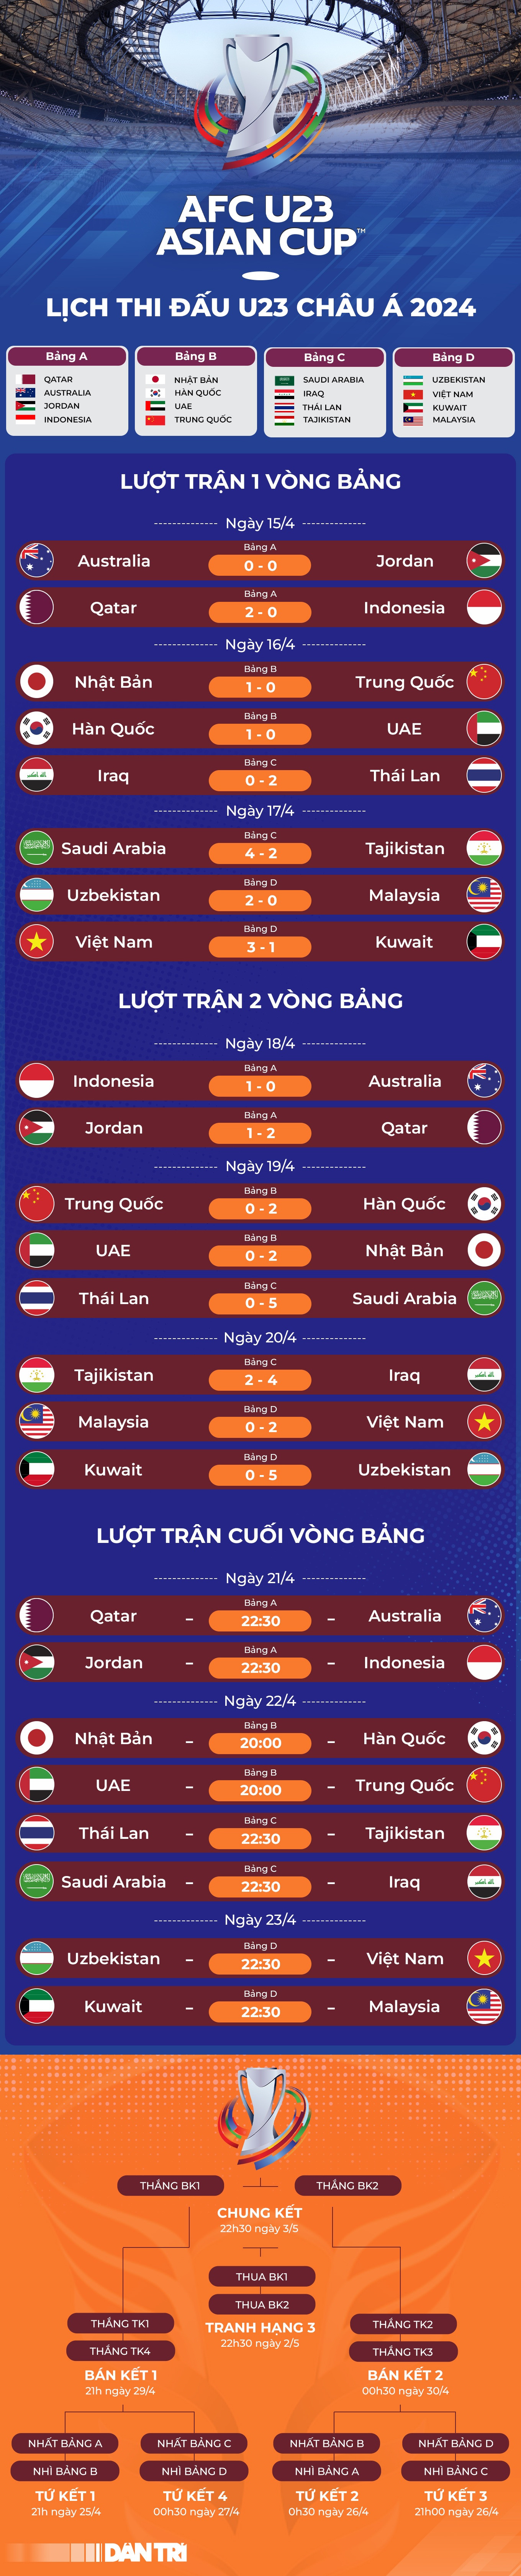 Hạ Kuwait 5-0, U23 Uzbekistan dẫn đầu bảng đấu của U23 Việt Nam - 2